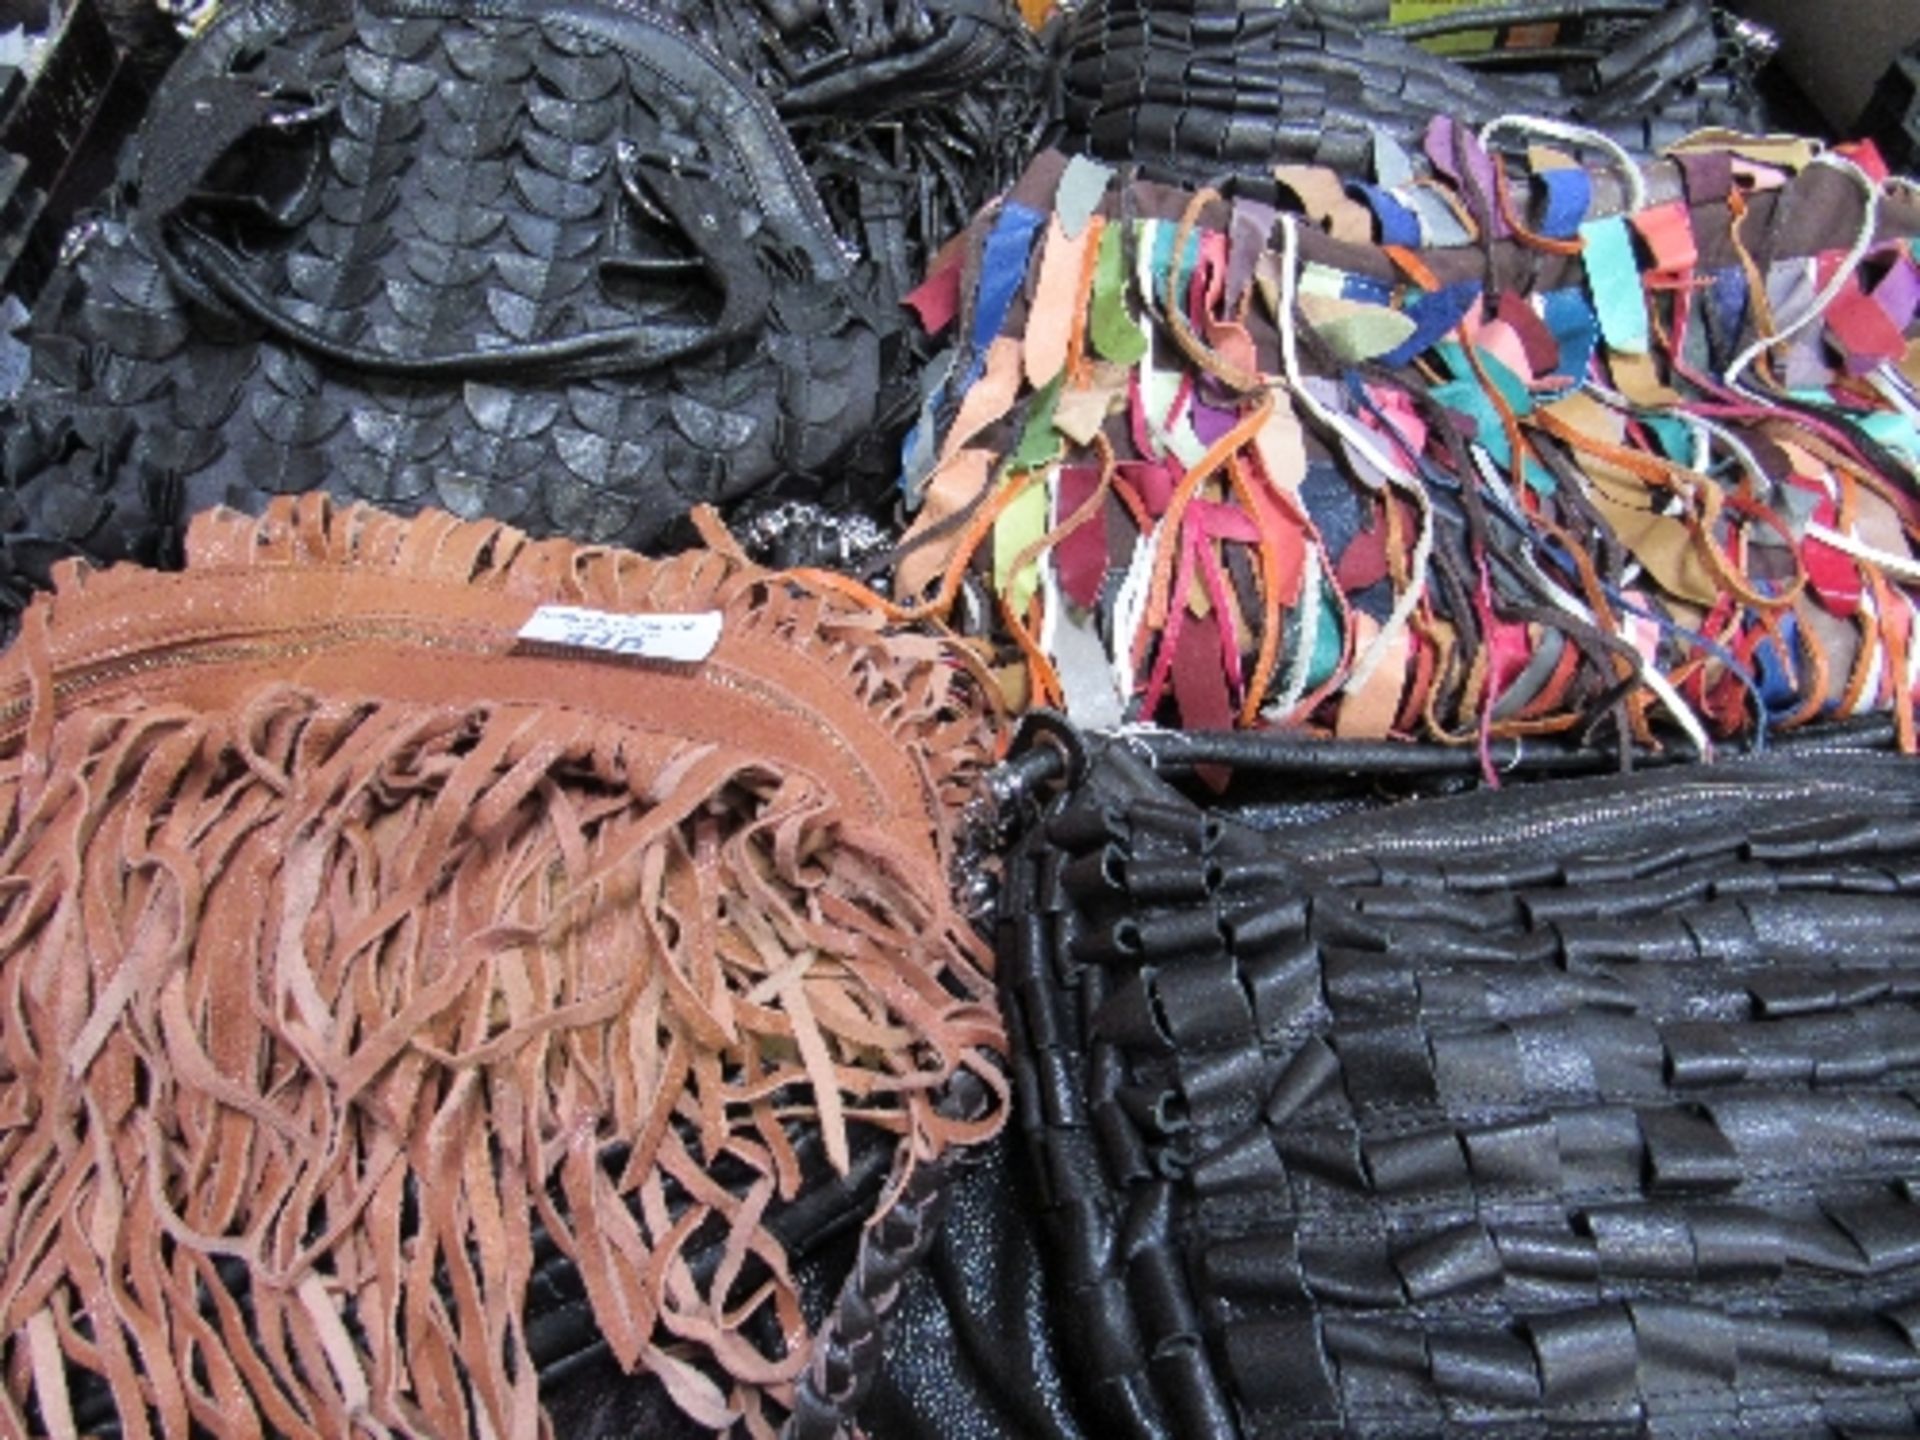 8 assorted leather handbags. Estimate £120-150